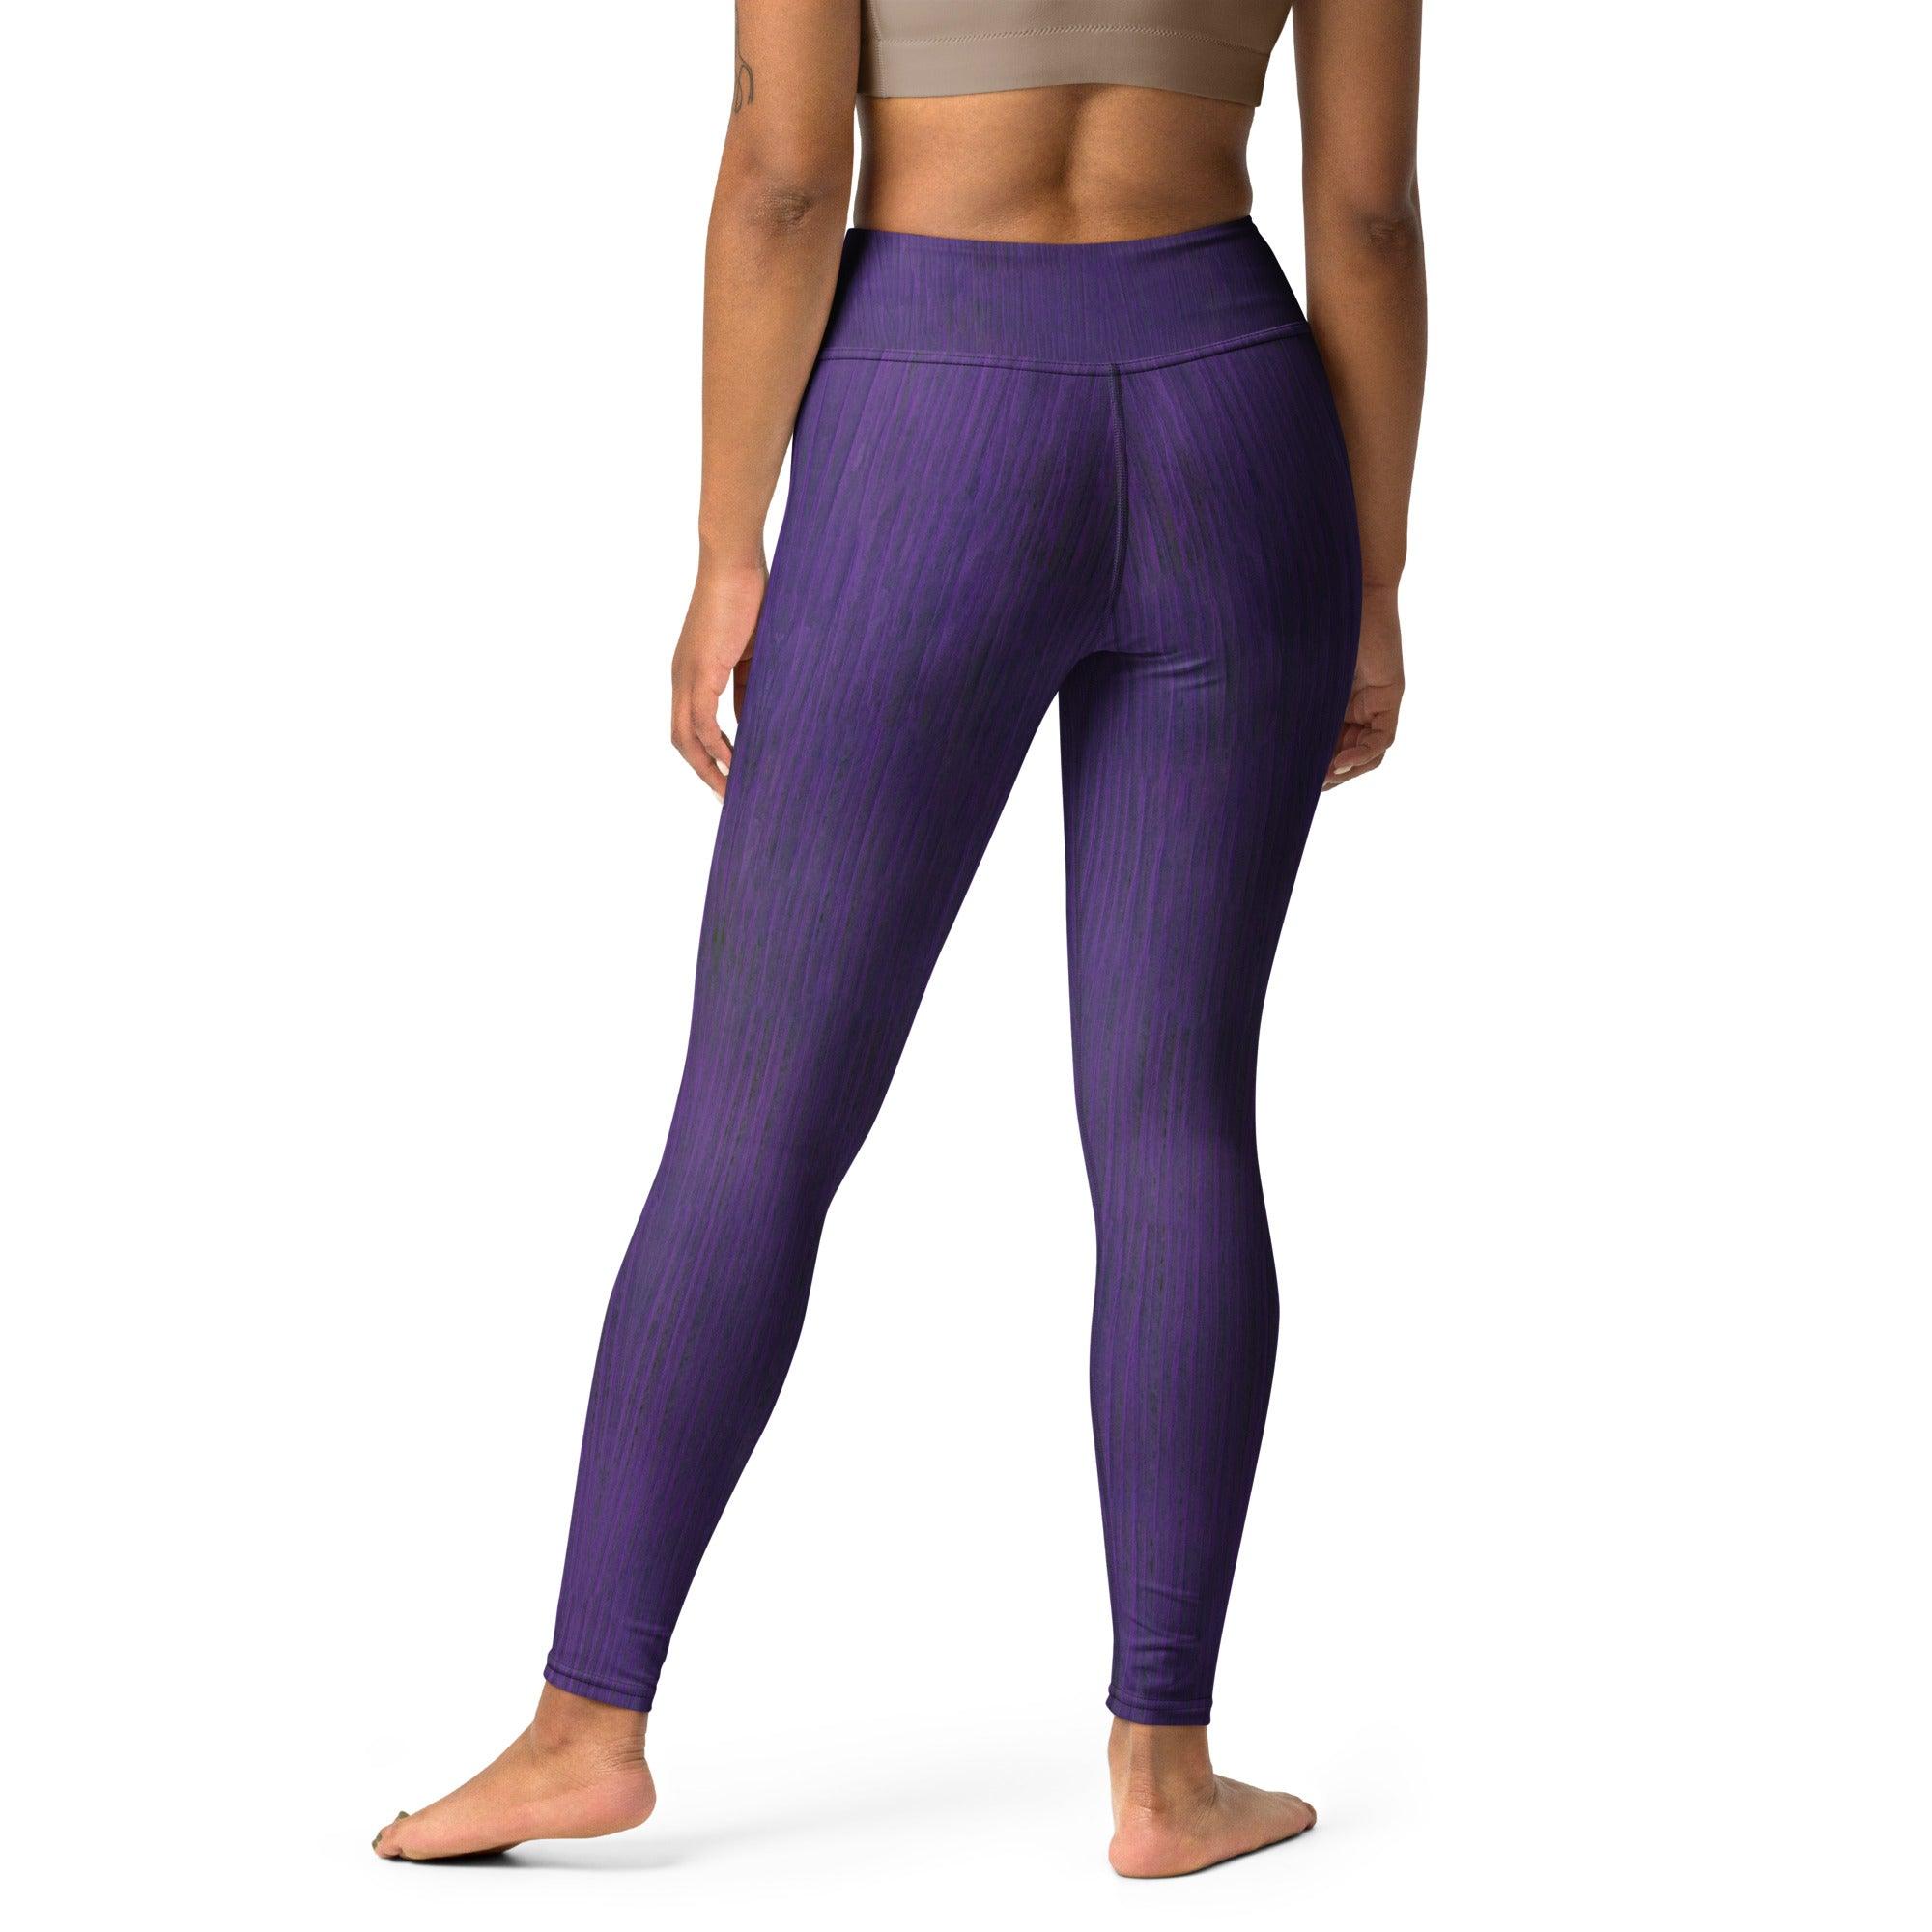 Deep purple yoga leggings product shot on white background.